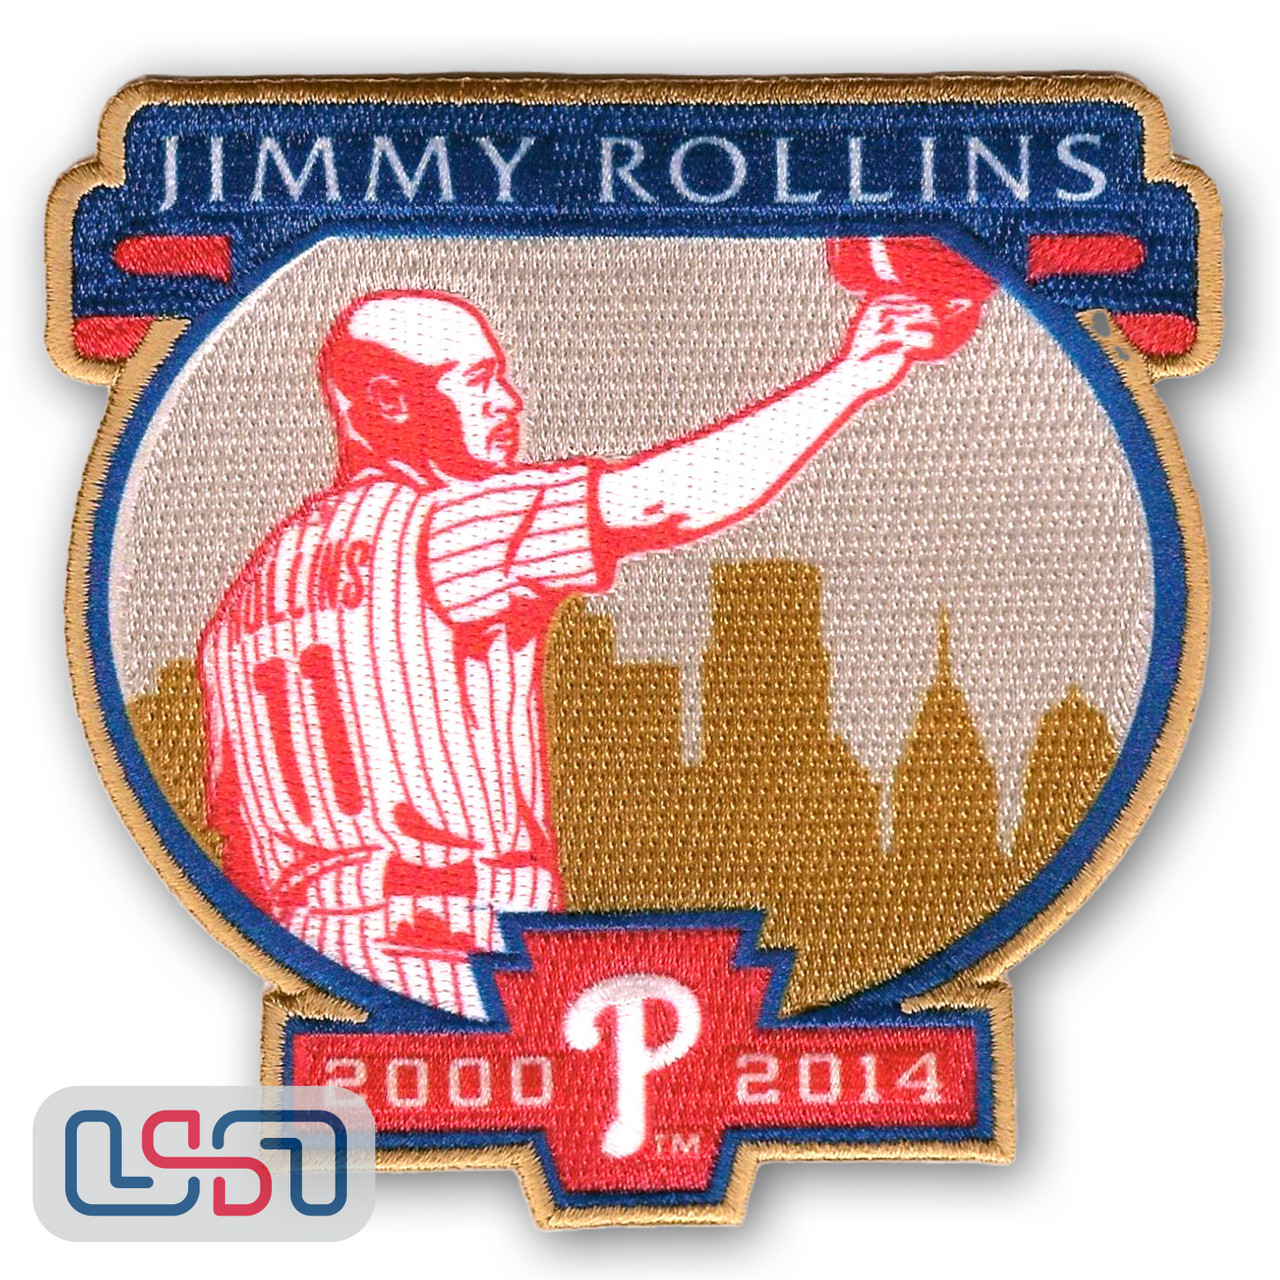 Jimmy Rollins player worn jersey patch baseball card (Philadelphia